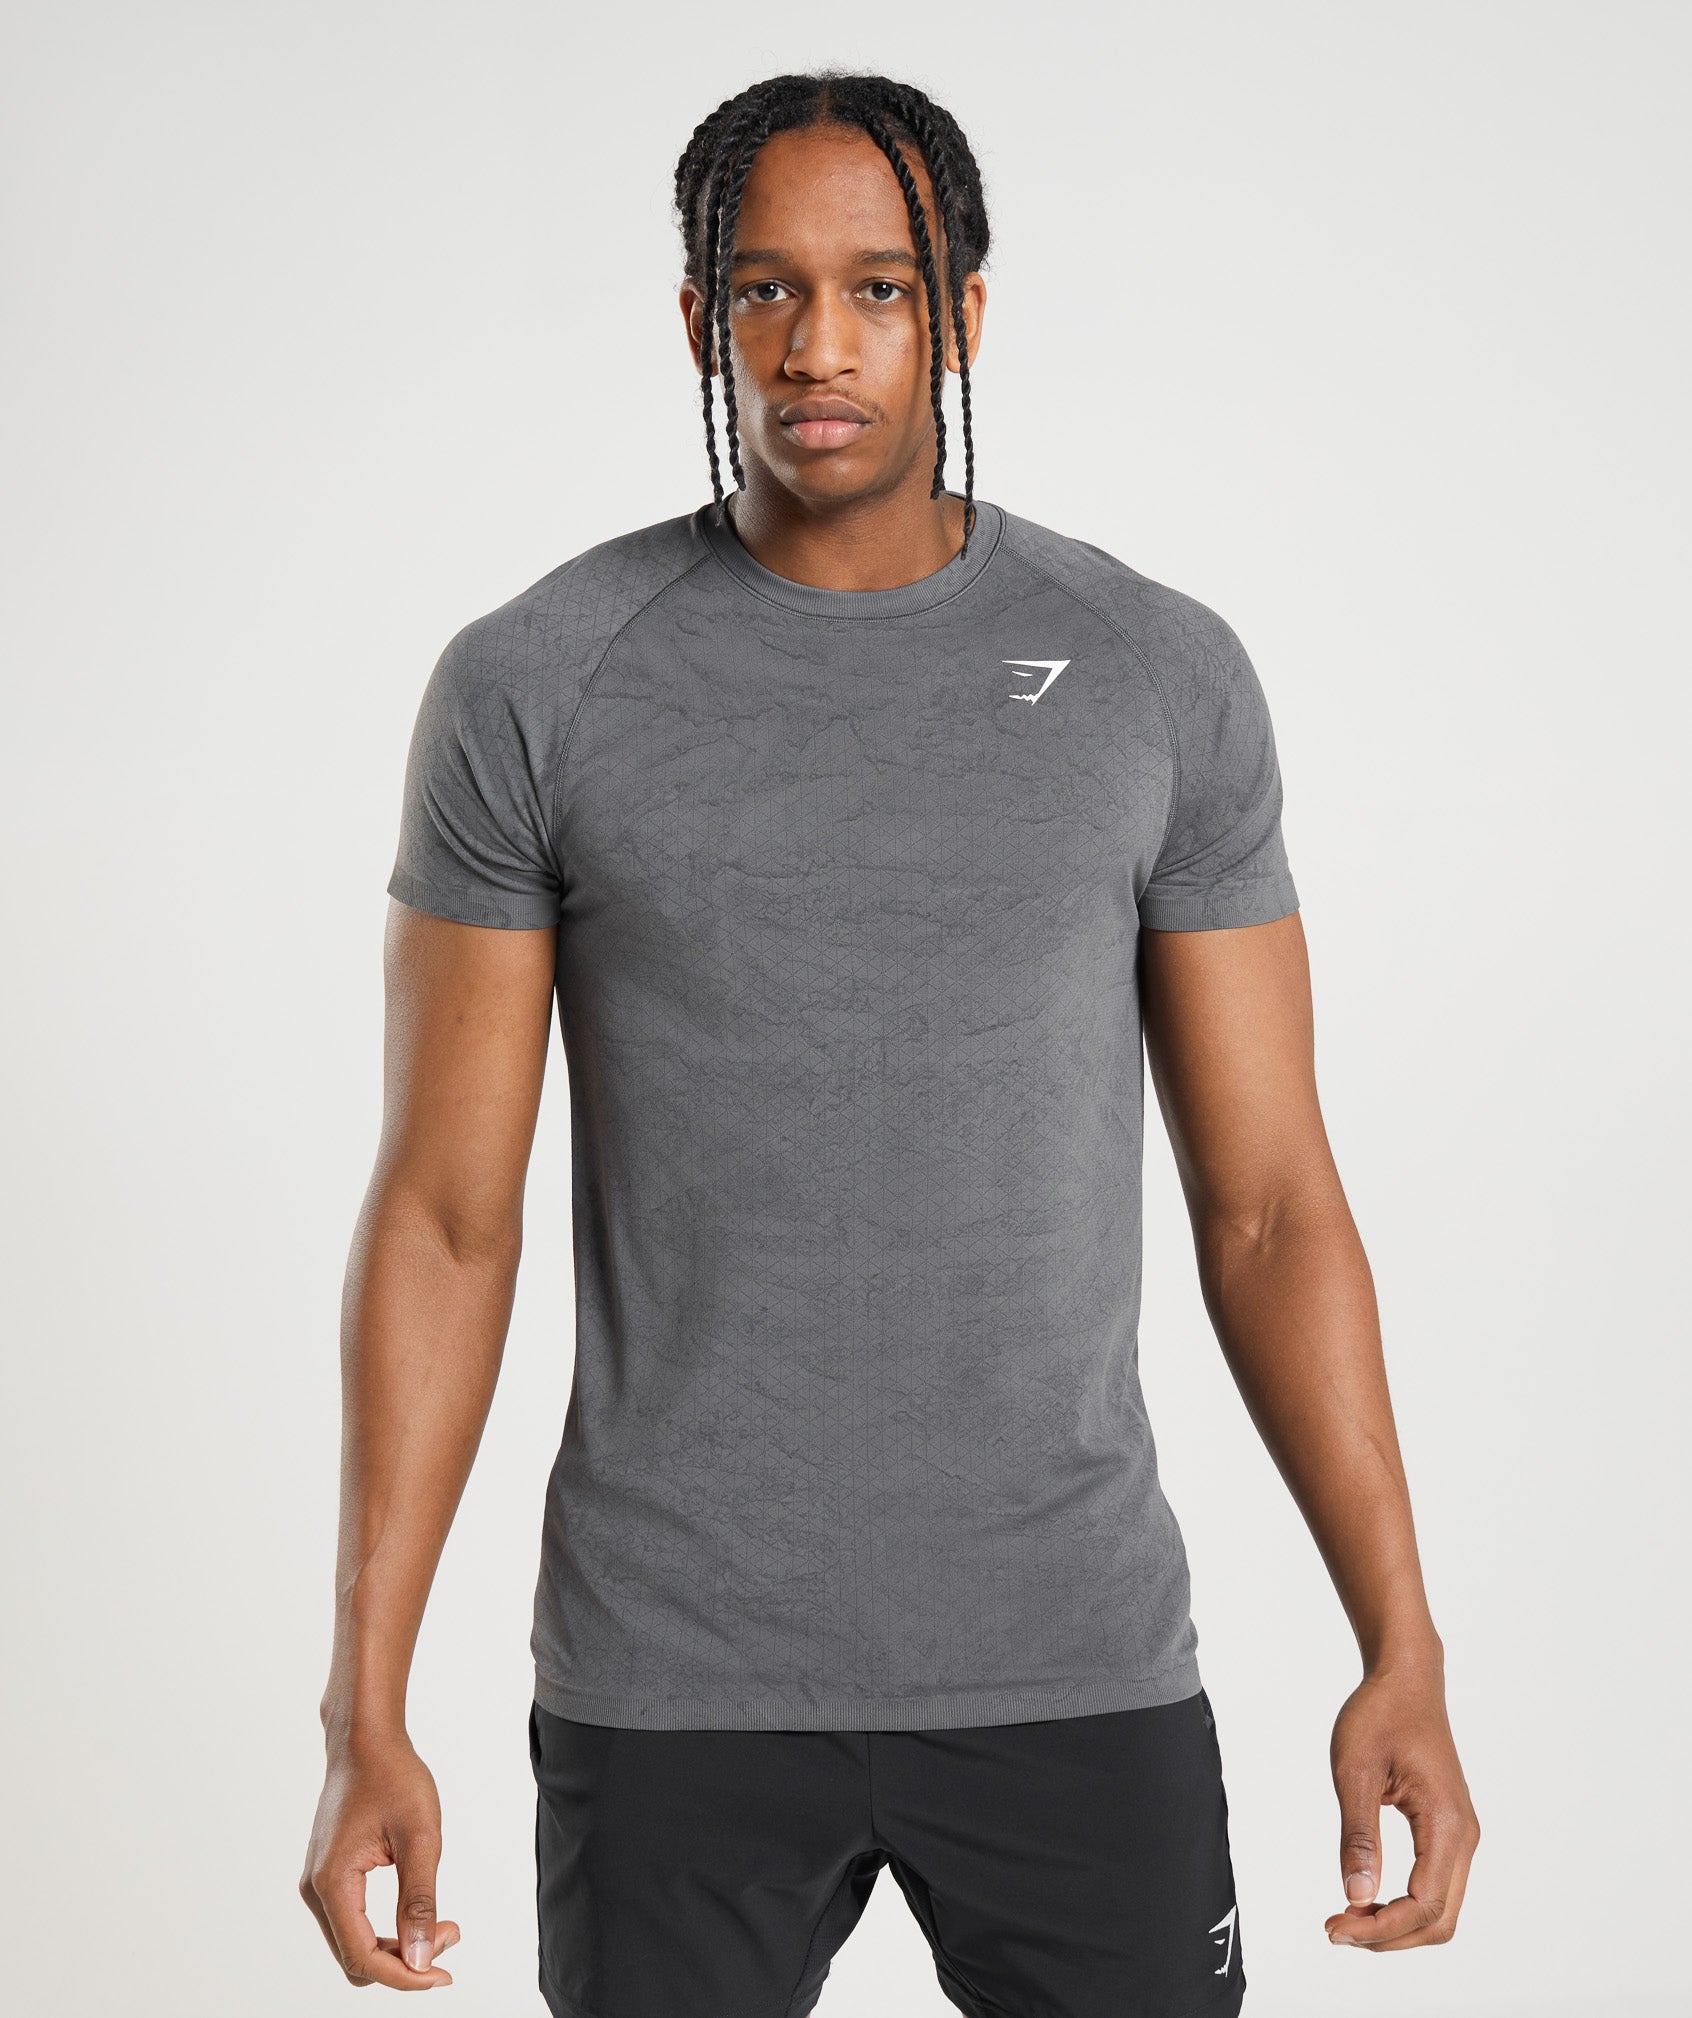 Gymshark Geo Seamless T-Shirt - Charcoal Grey/Black | Gymshark